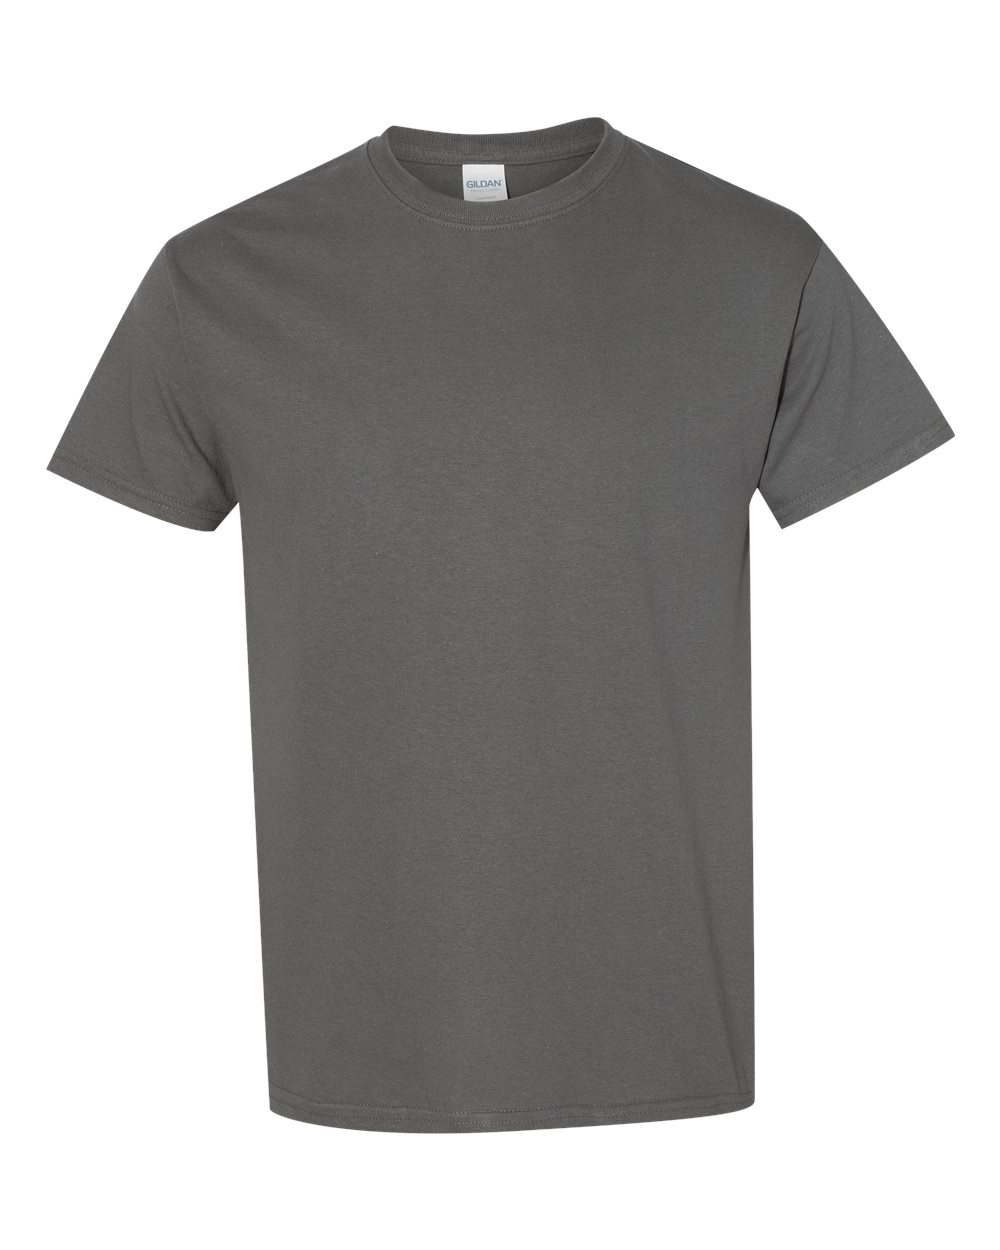 Pretreated Gildan 5000 Heavy Cotton T-Shirt - Charcoal